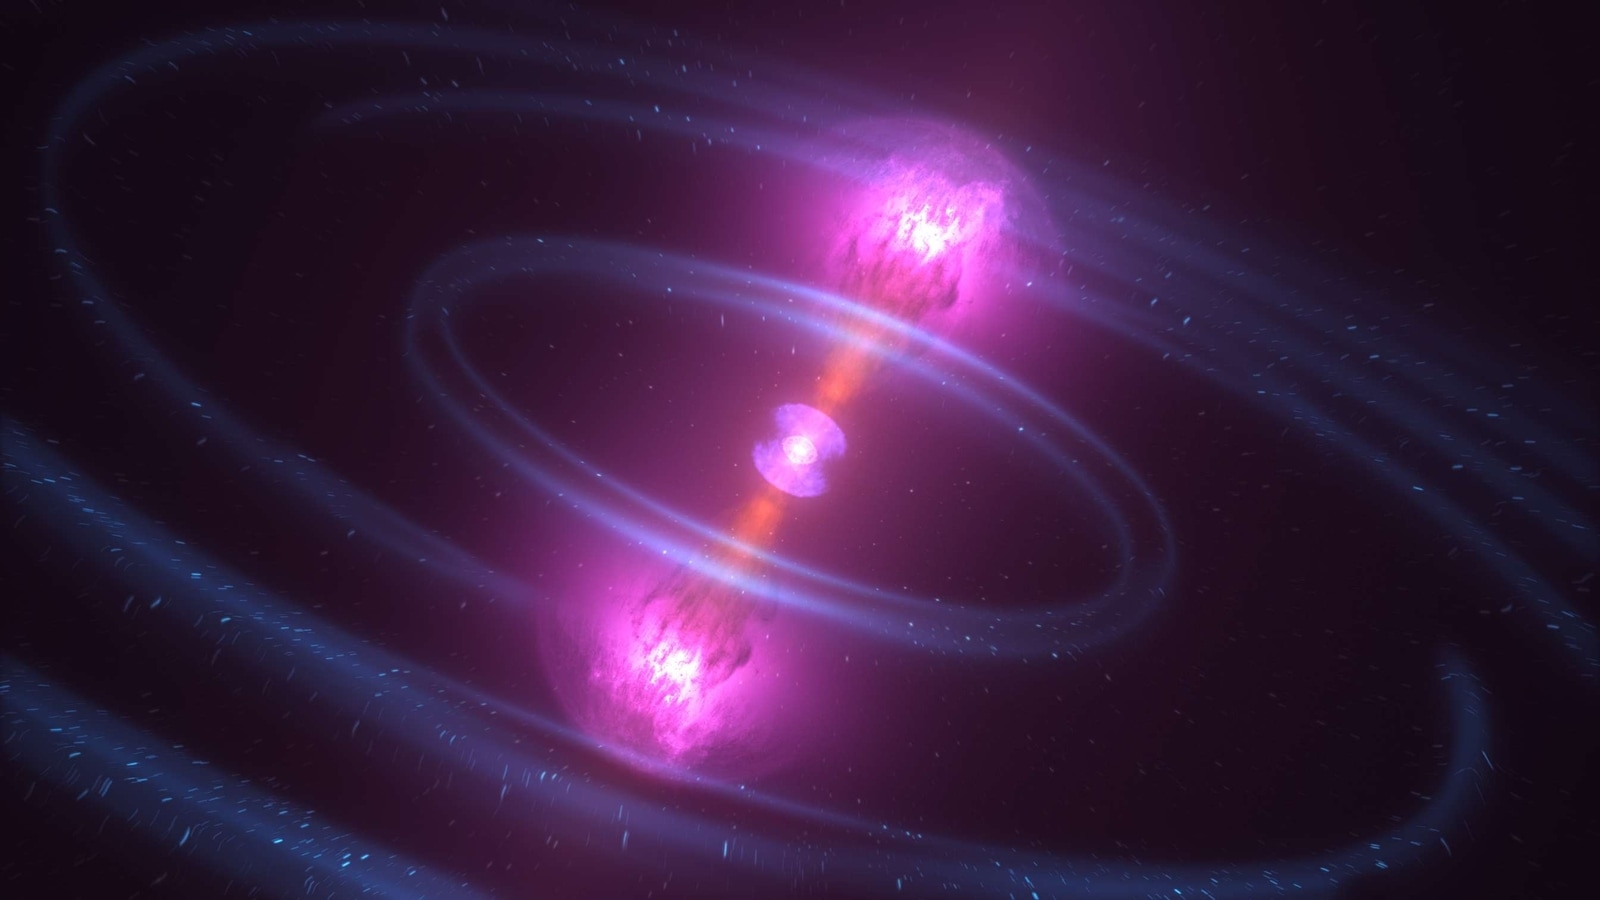 Perfect explosion! 2 Neutron stars collide, spark amazing spherical Kilonova explosions